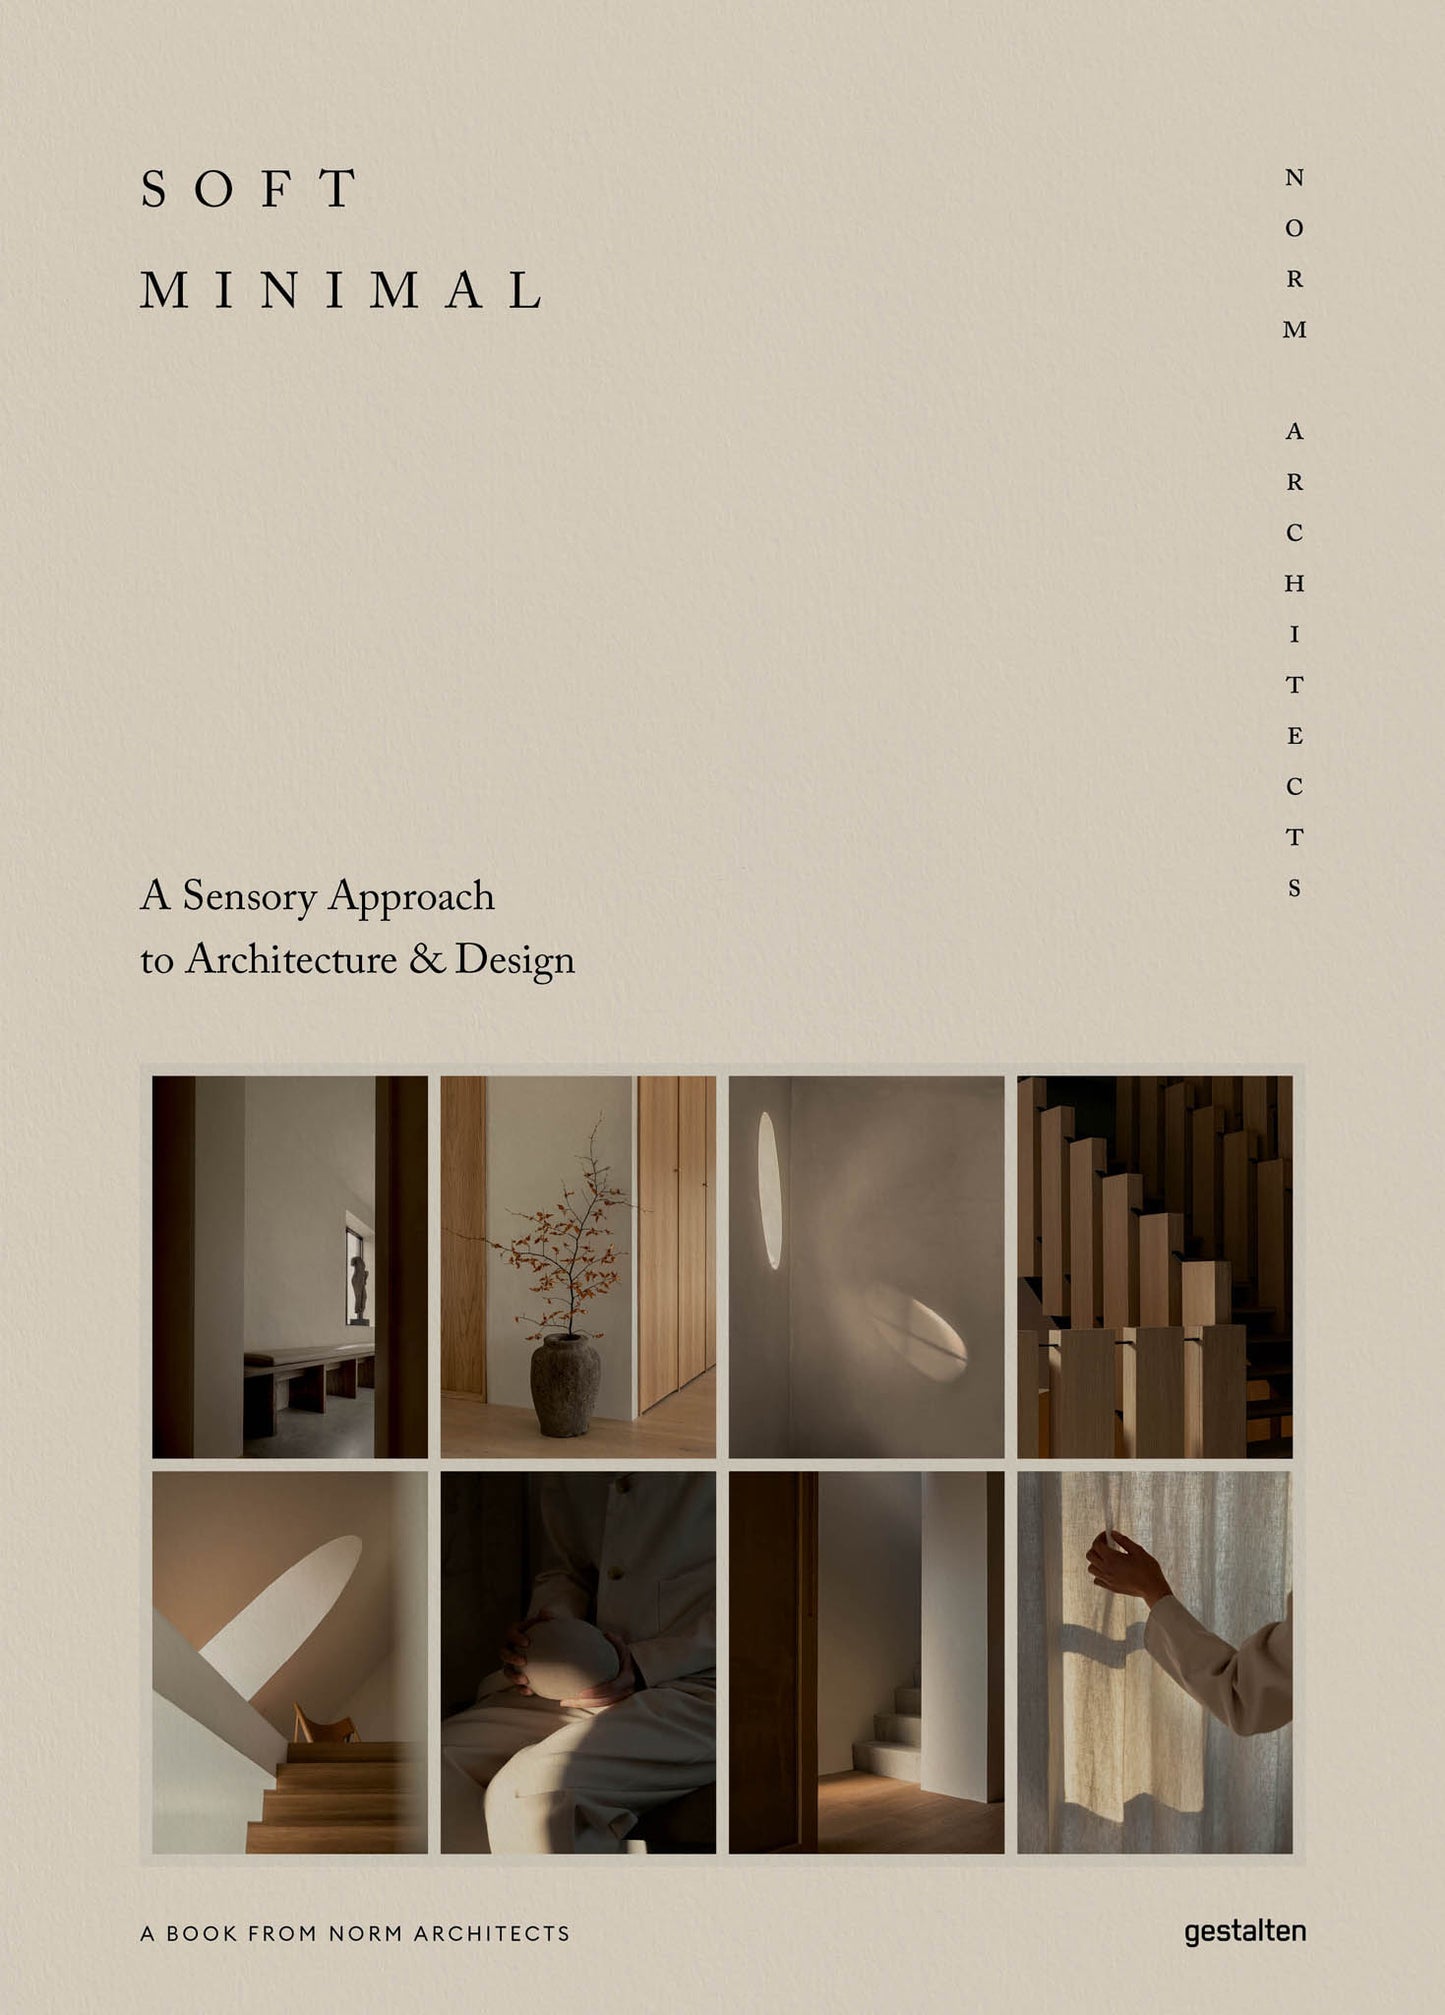 gestalten - Coffe Table Book "Soft Minimal" - Leja Concept Store